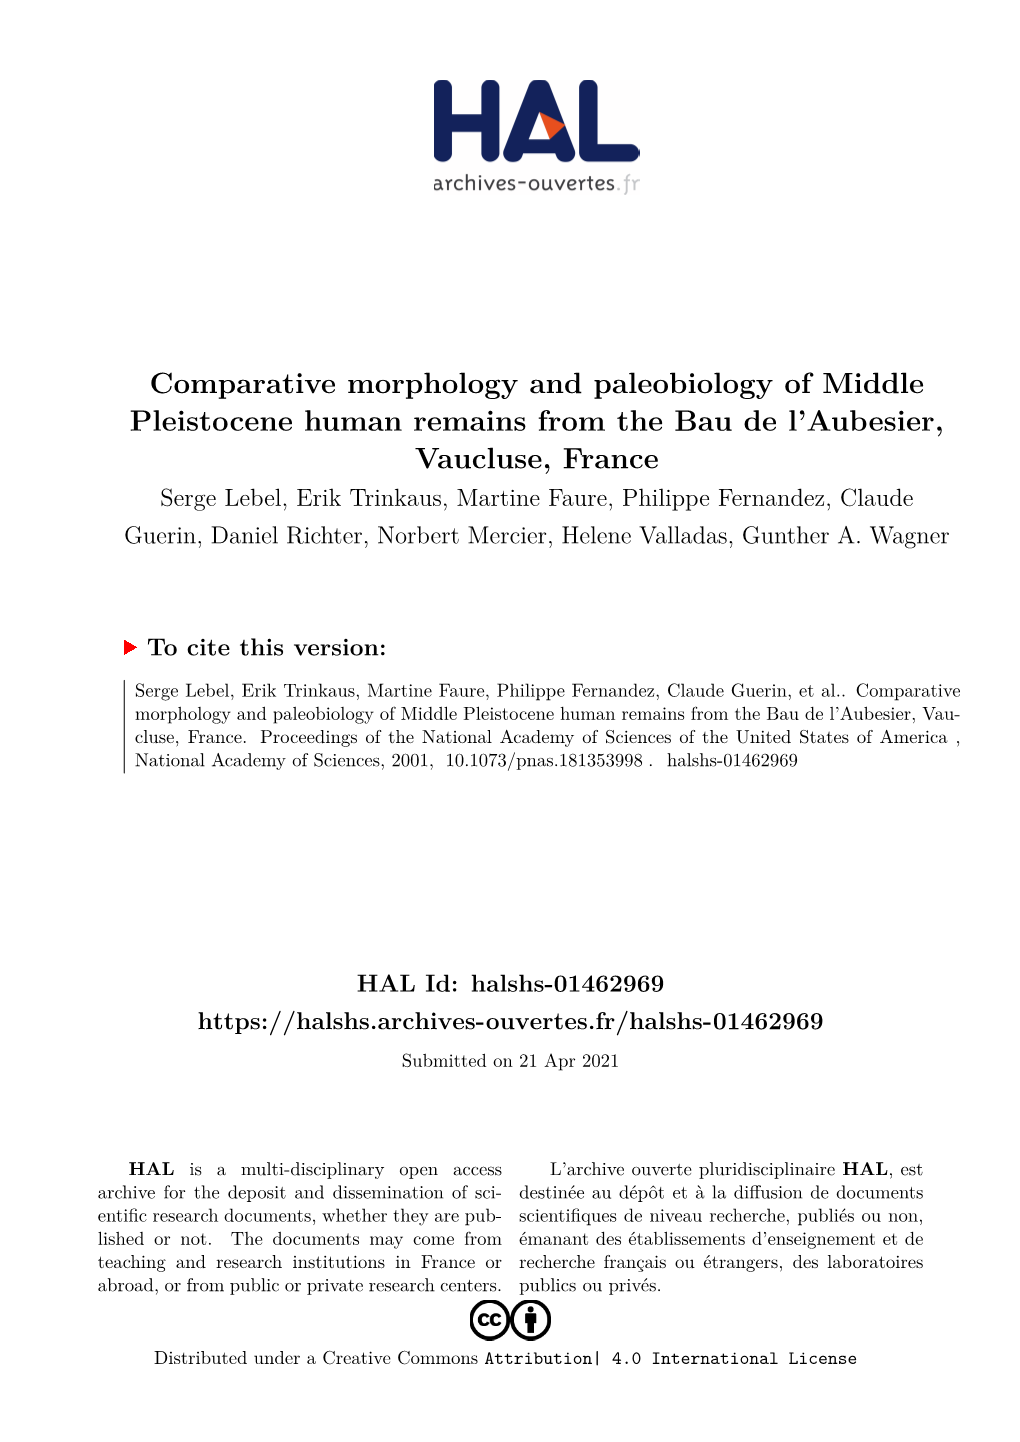 Comparative Morphology and Paleobiology of Middle Pleistocene